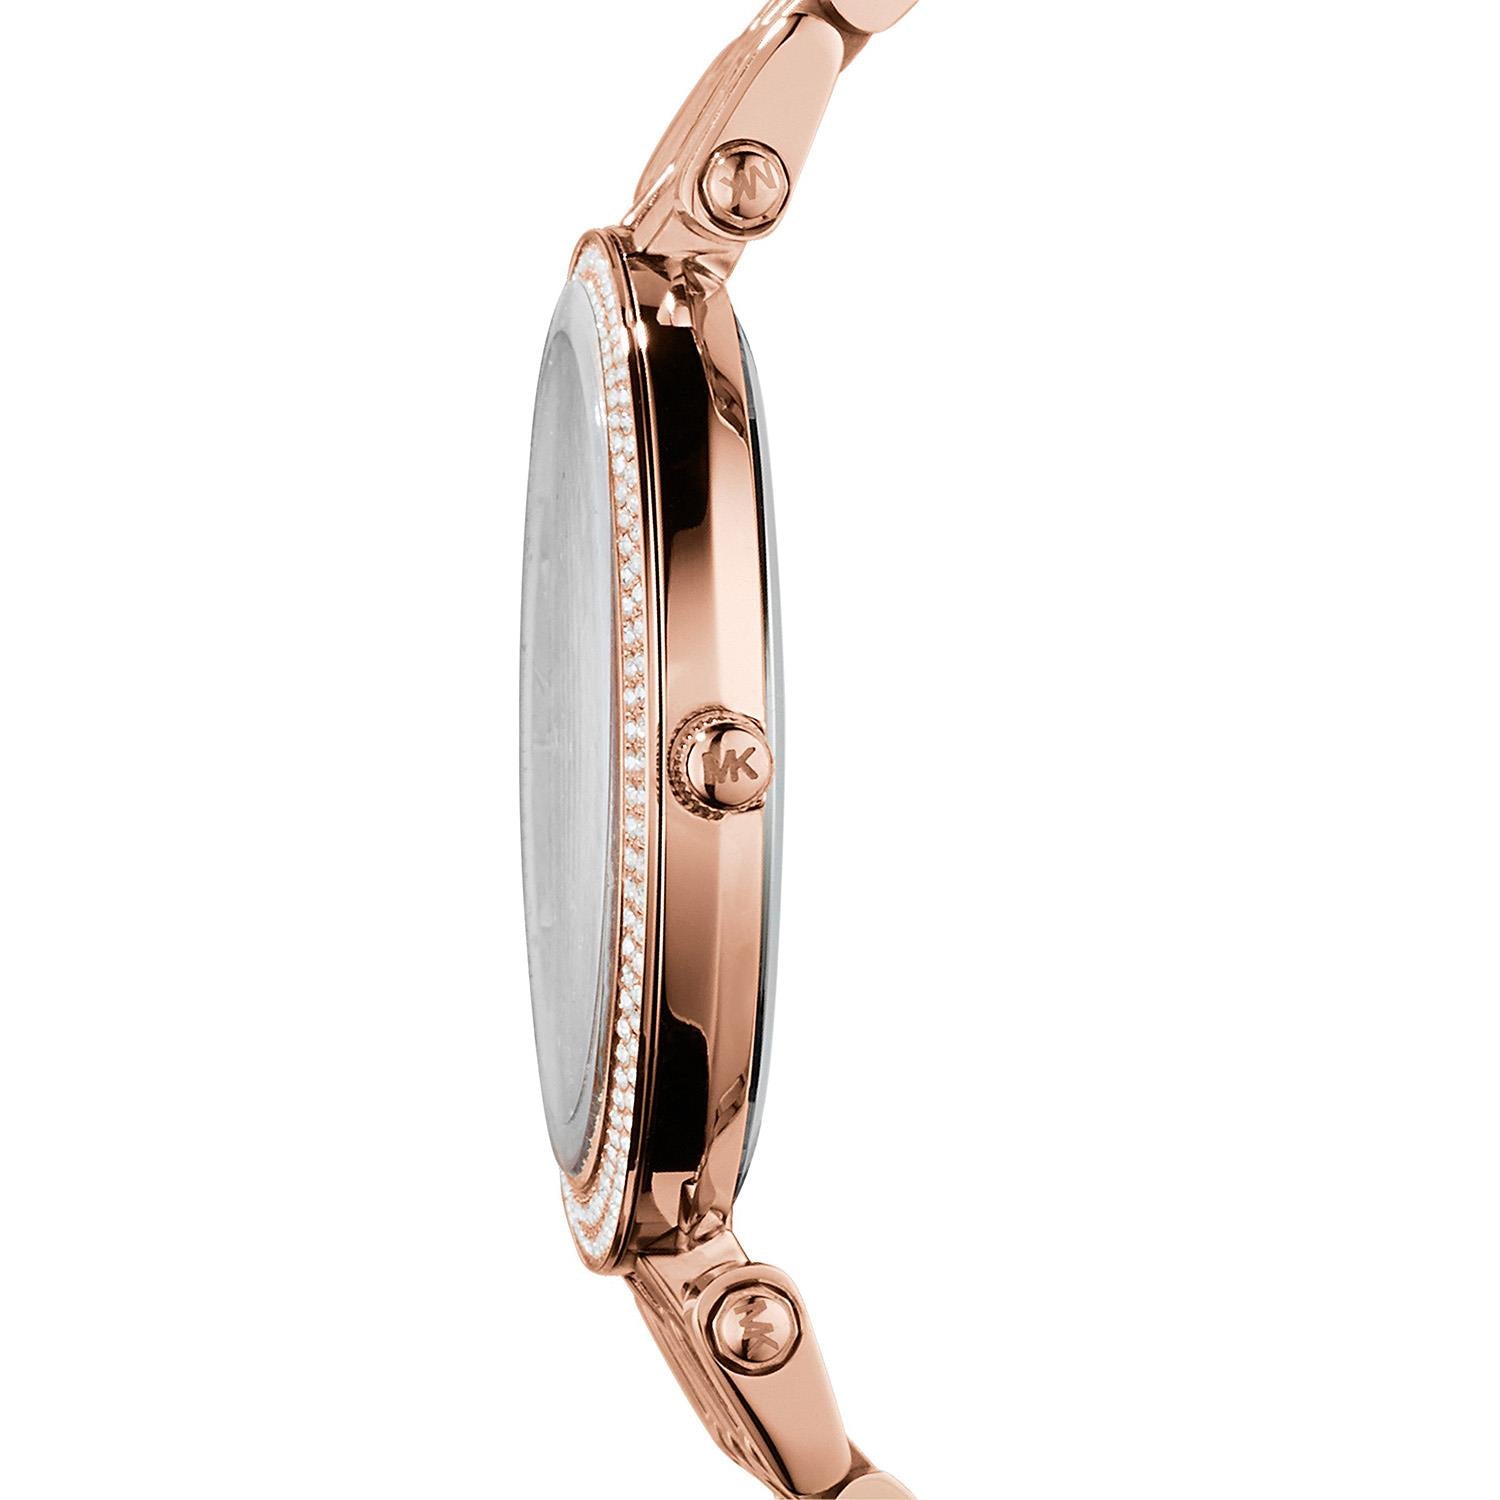 Michael Kors MK3192 Women's Darci Rose Gold Stainless Steel Watch